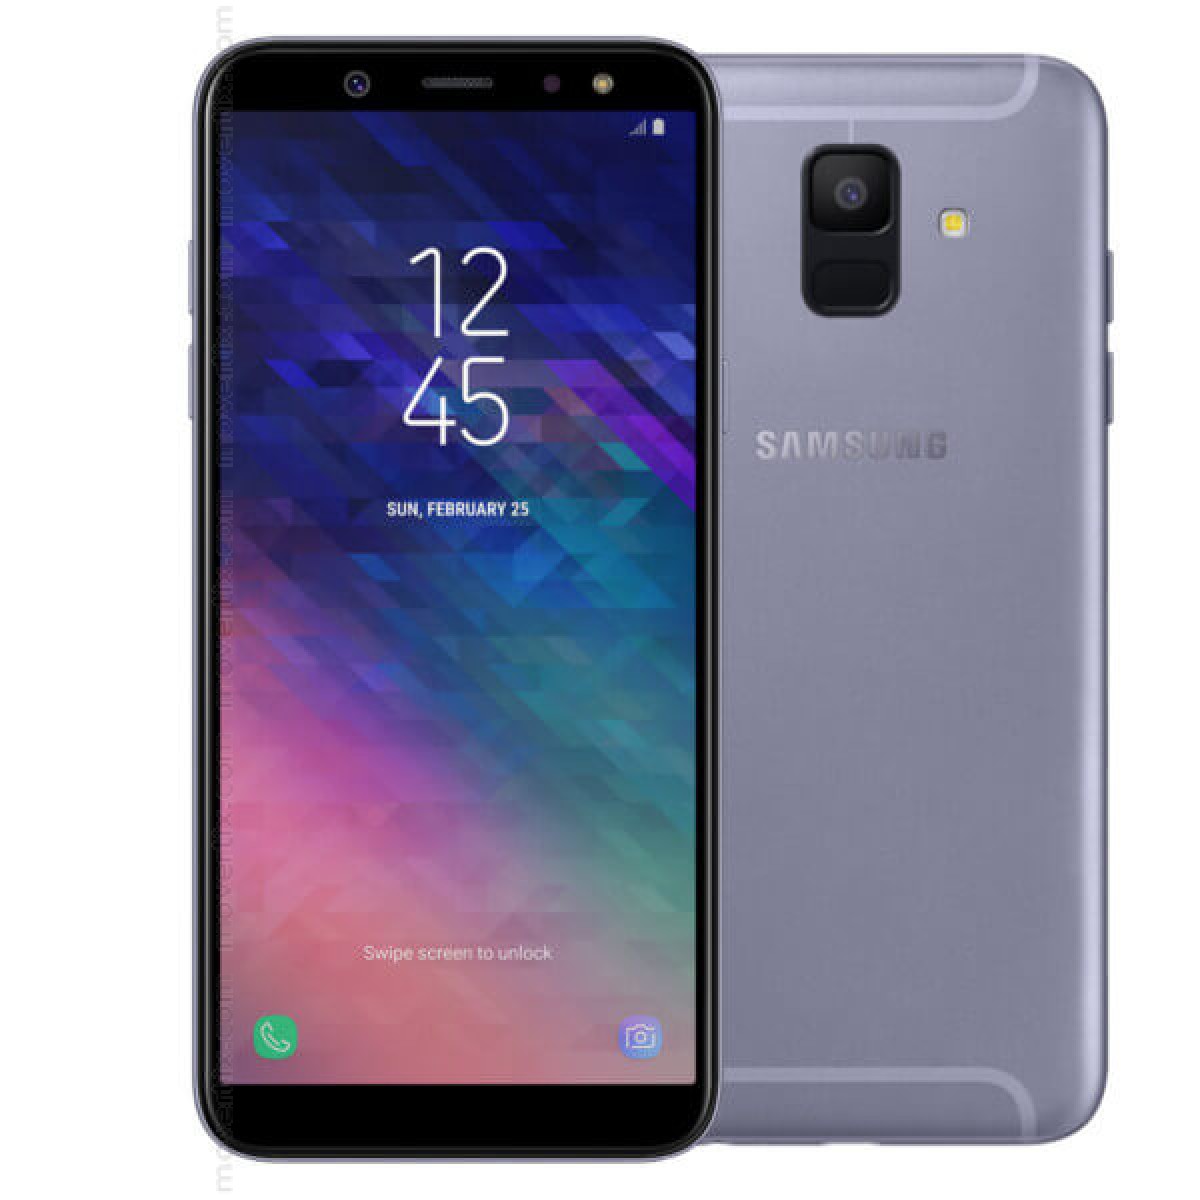 Image 1: [Promo] The Samsung Galaxy A6 at 129 €